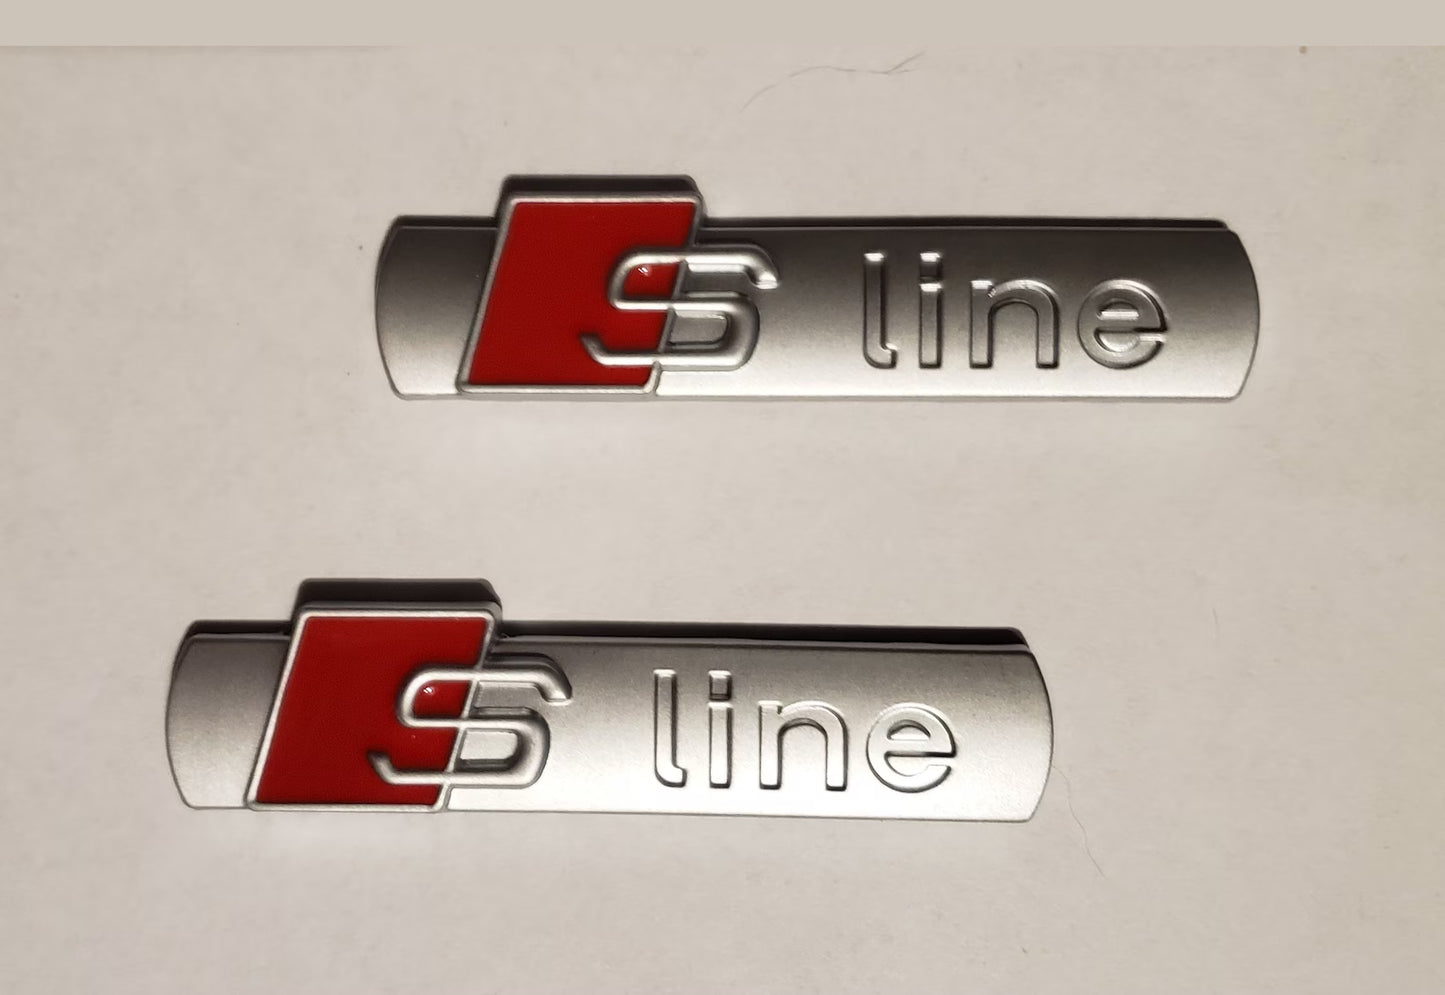 2x Logos / Embleme S-Line Origine Audi Silver – France Tuning